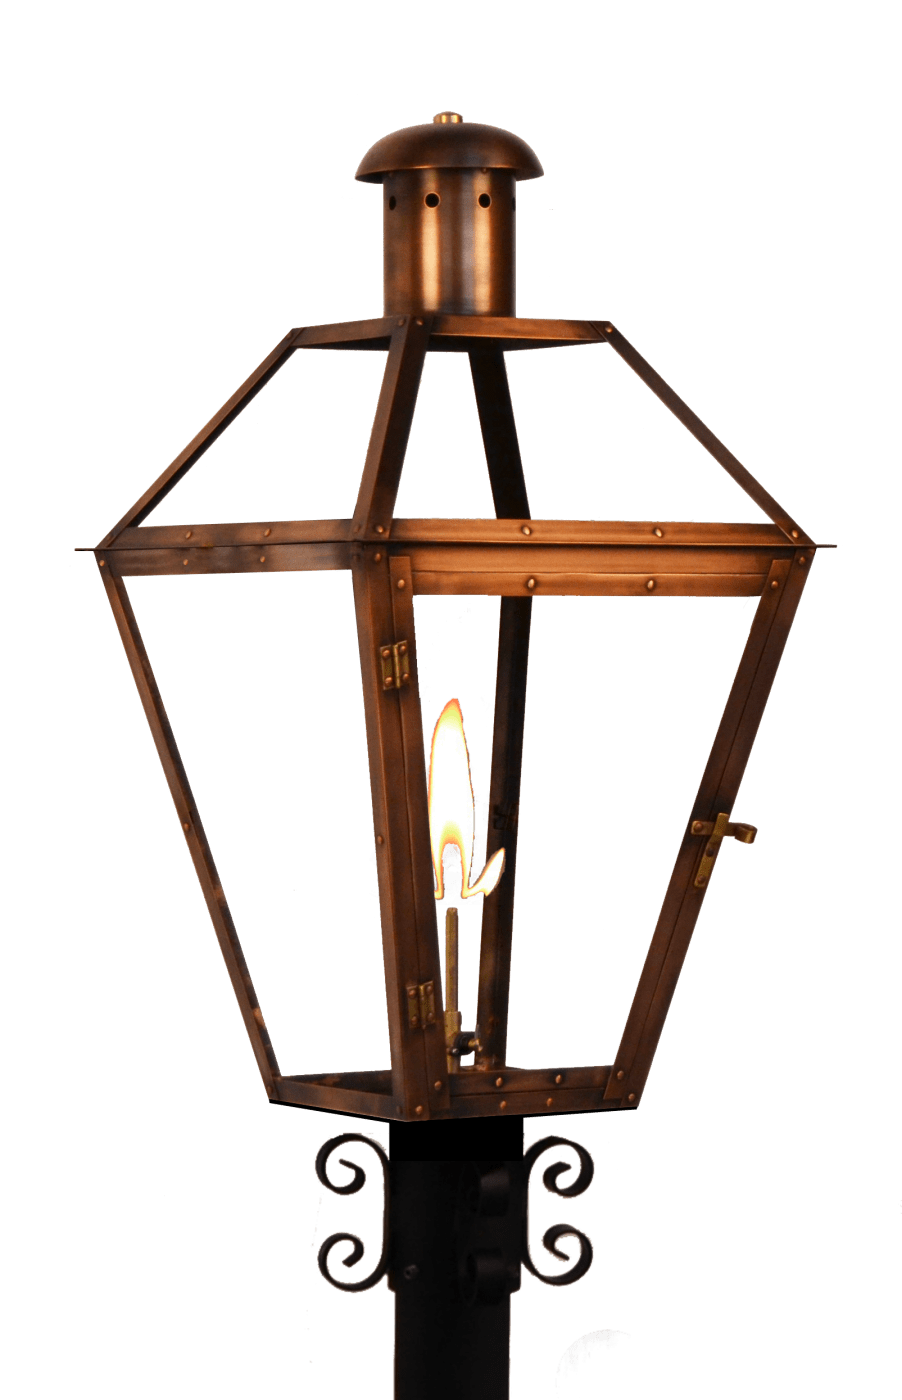 Electric Copper Lanterns For Sale $500-$599